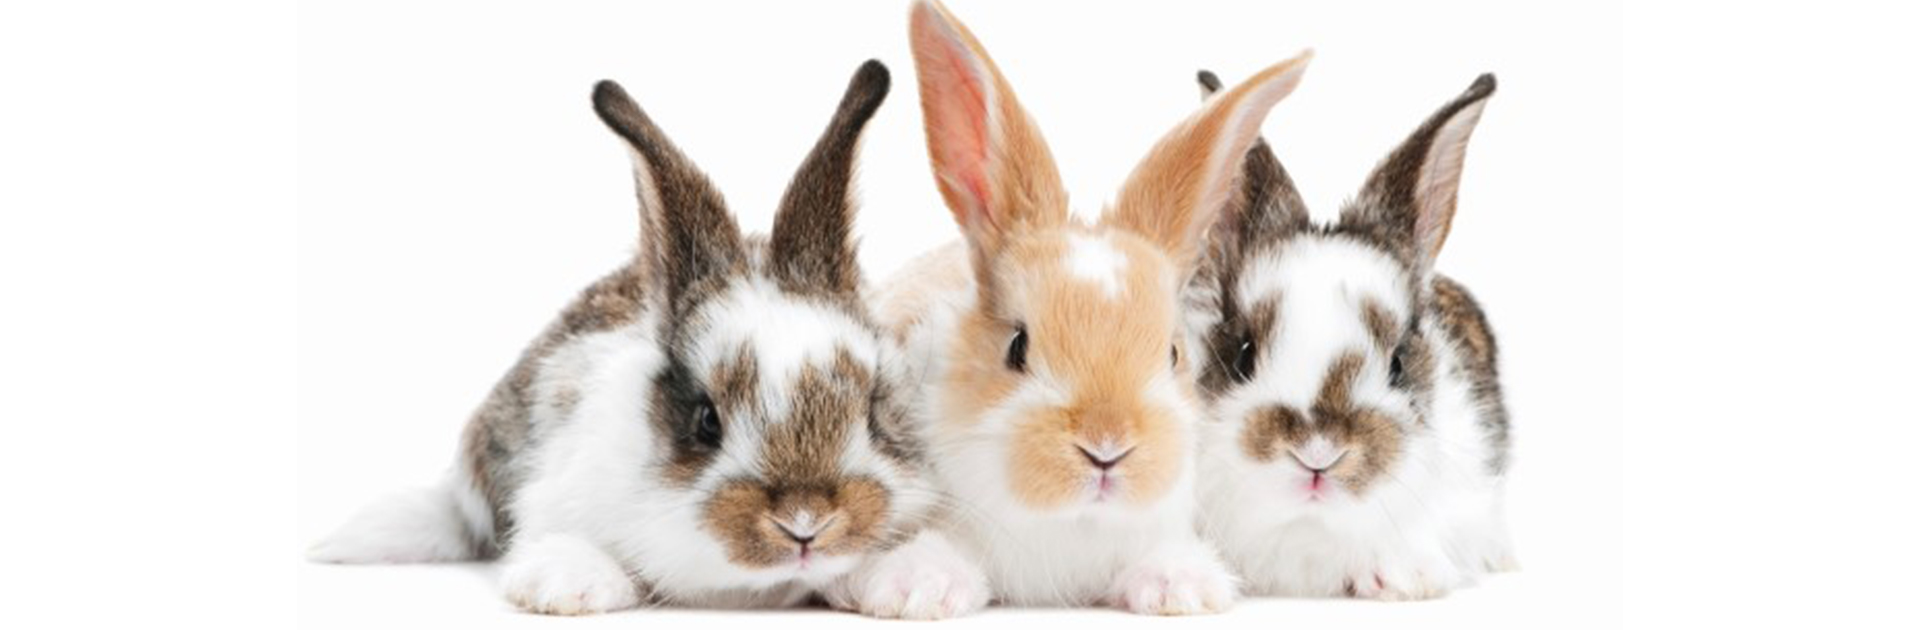 Rabbit awareness week banner